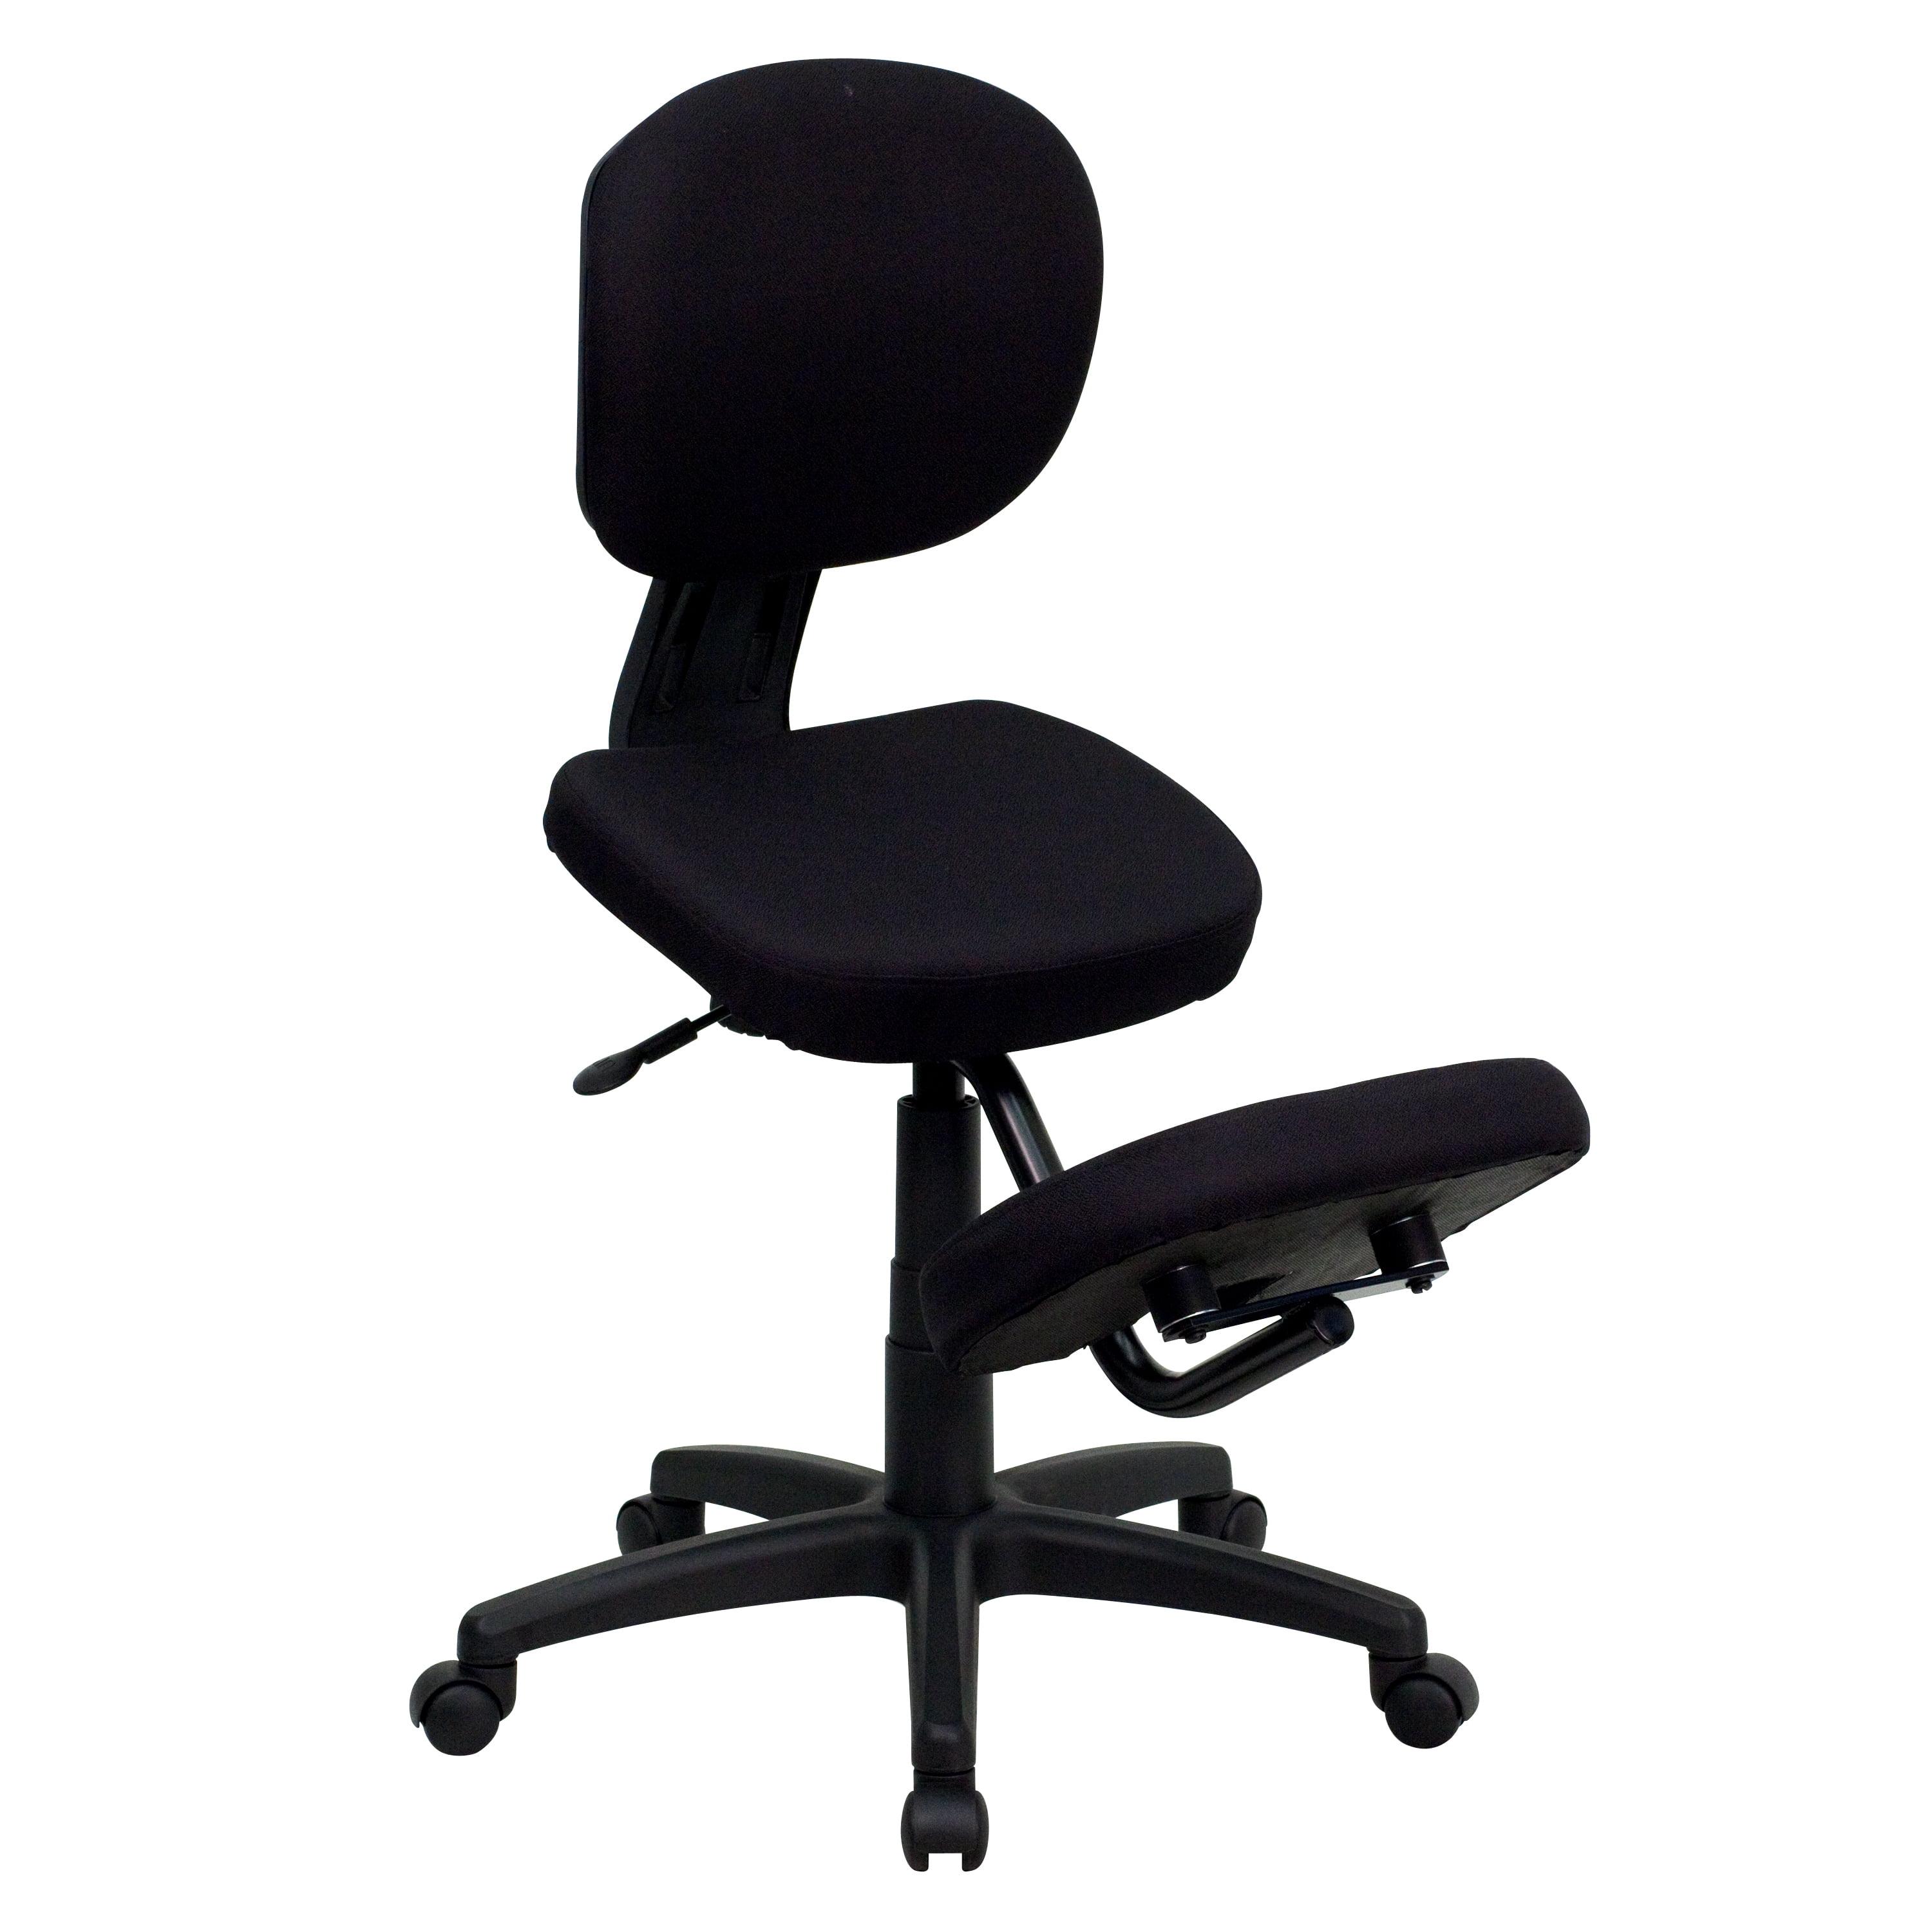 42" Swivel Ergonomic Kneeling Office Chair in Black Fabric and Wood